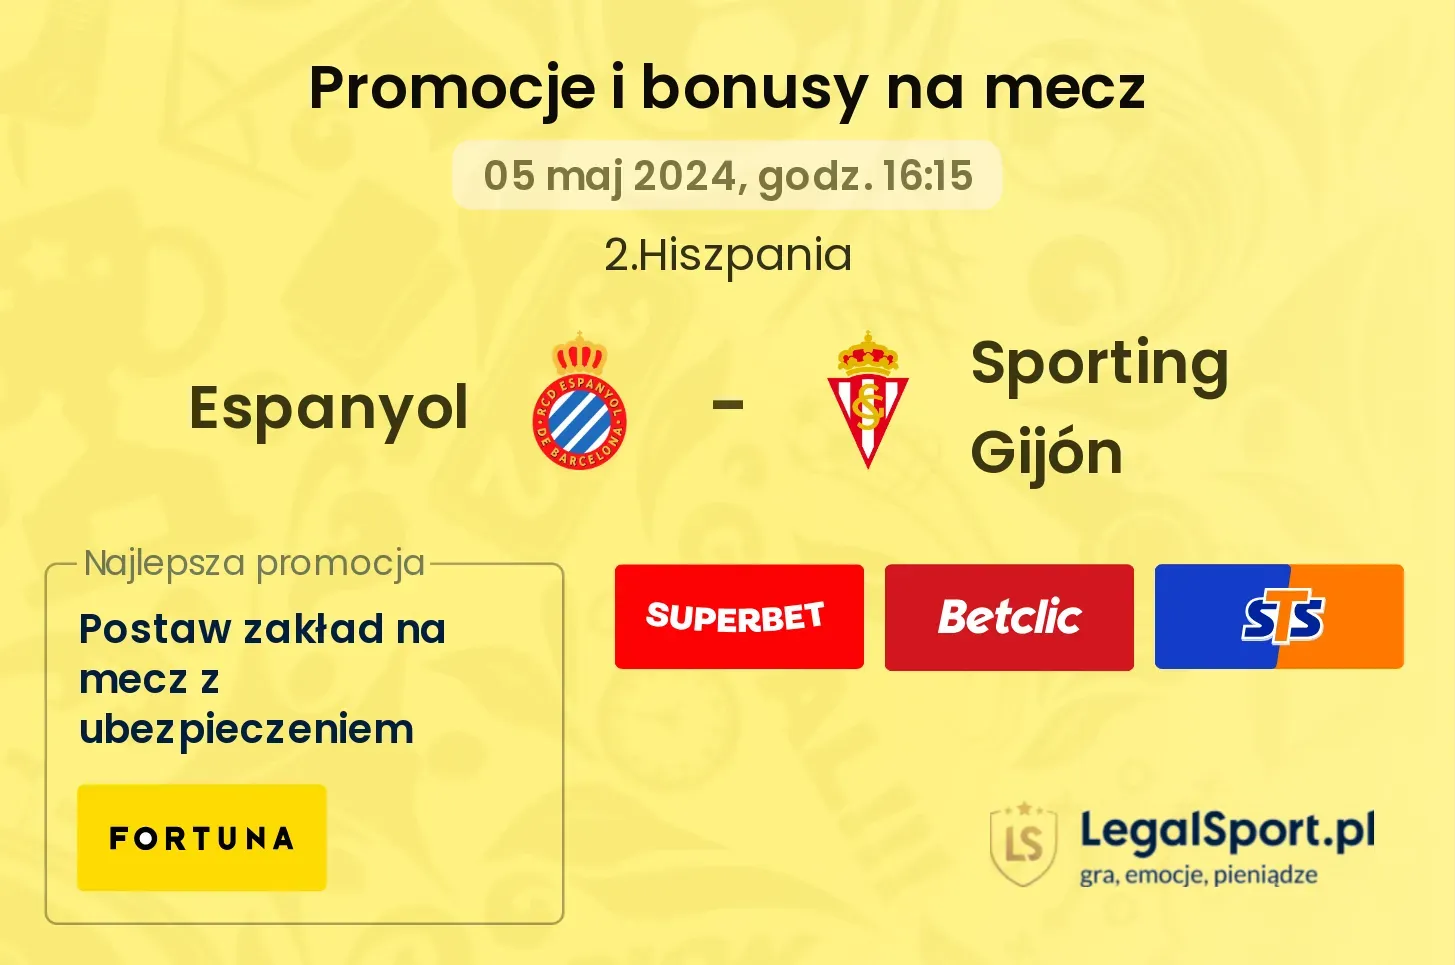 Espanyol - Sporting Gijón promocje bonusy na mecz